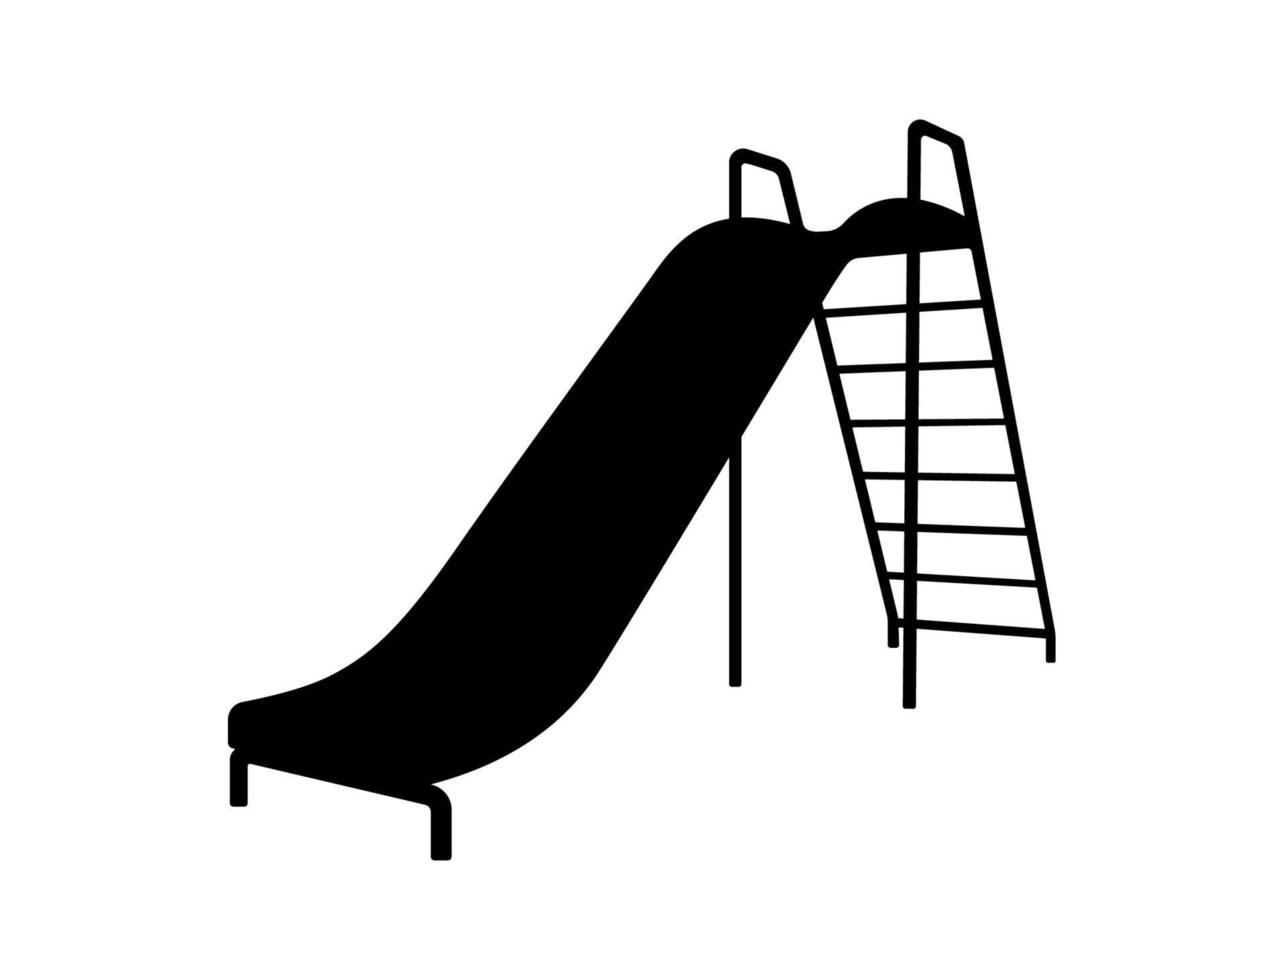 Playground slide Silhouette, Children's play zone icon illustration. vector